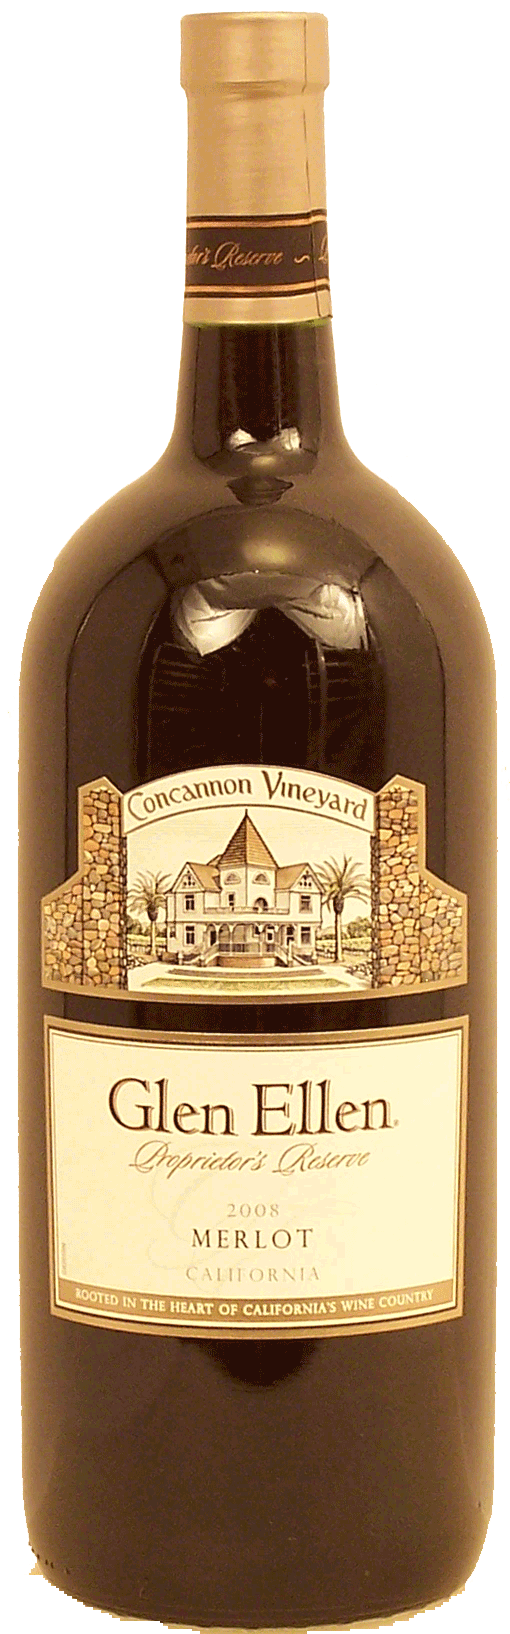 Glen Ellen Proprietor's Reserve merlot wine of California, Concannon Vineyard, 13% alc. by vol. Full-Size Picture